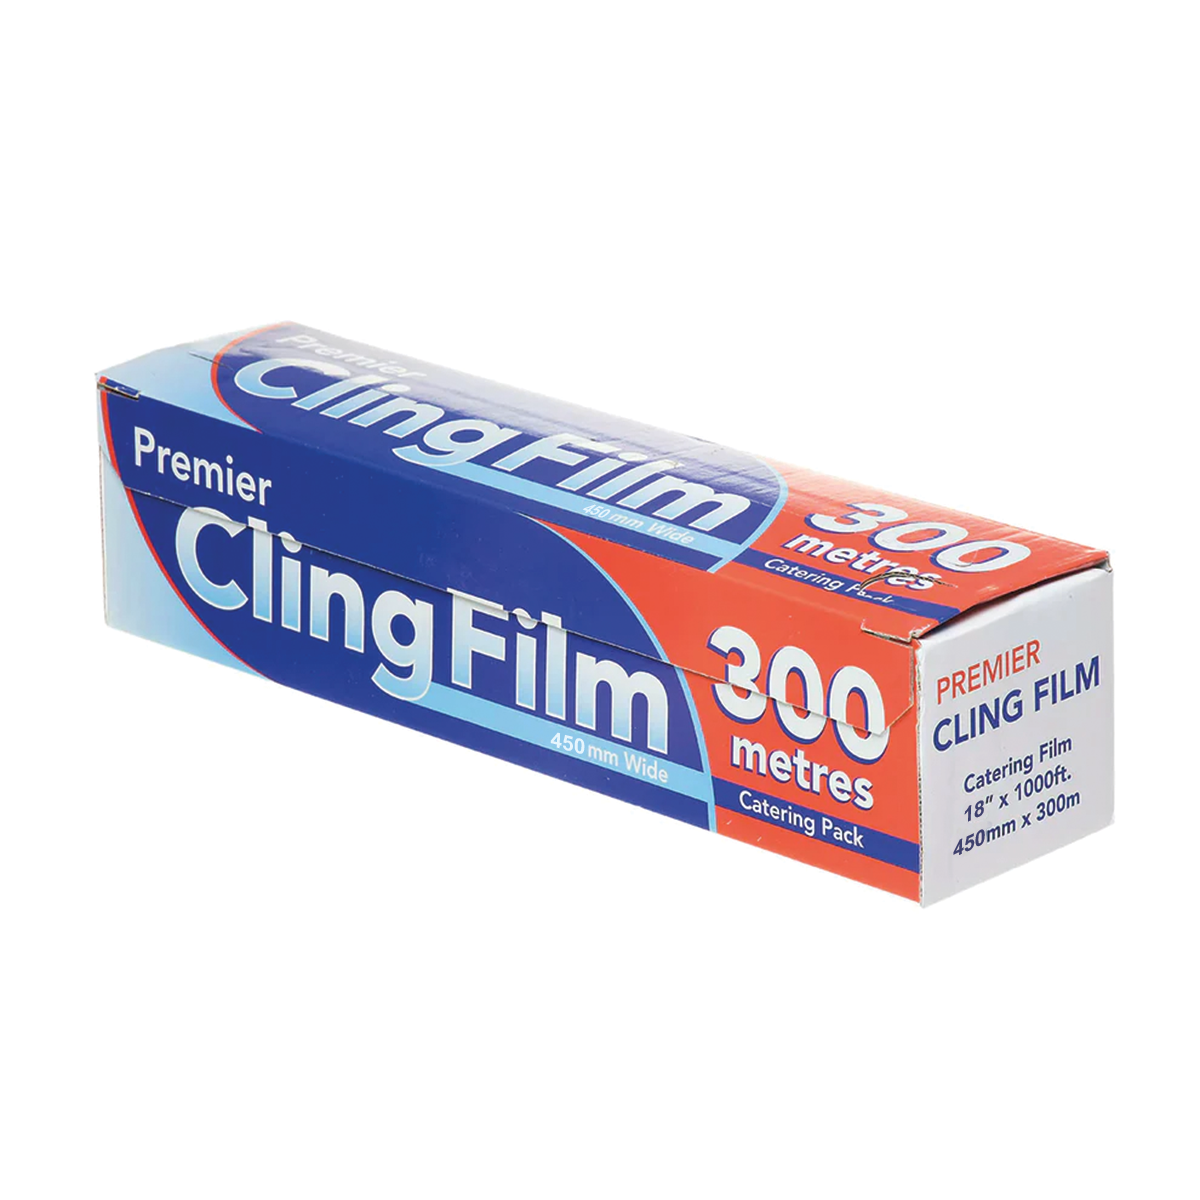 Large Cling Film 300m